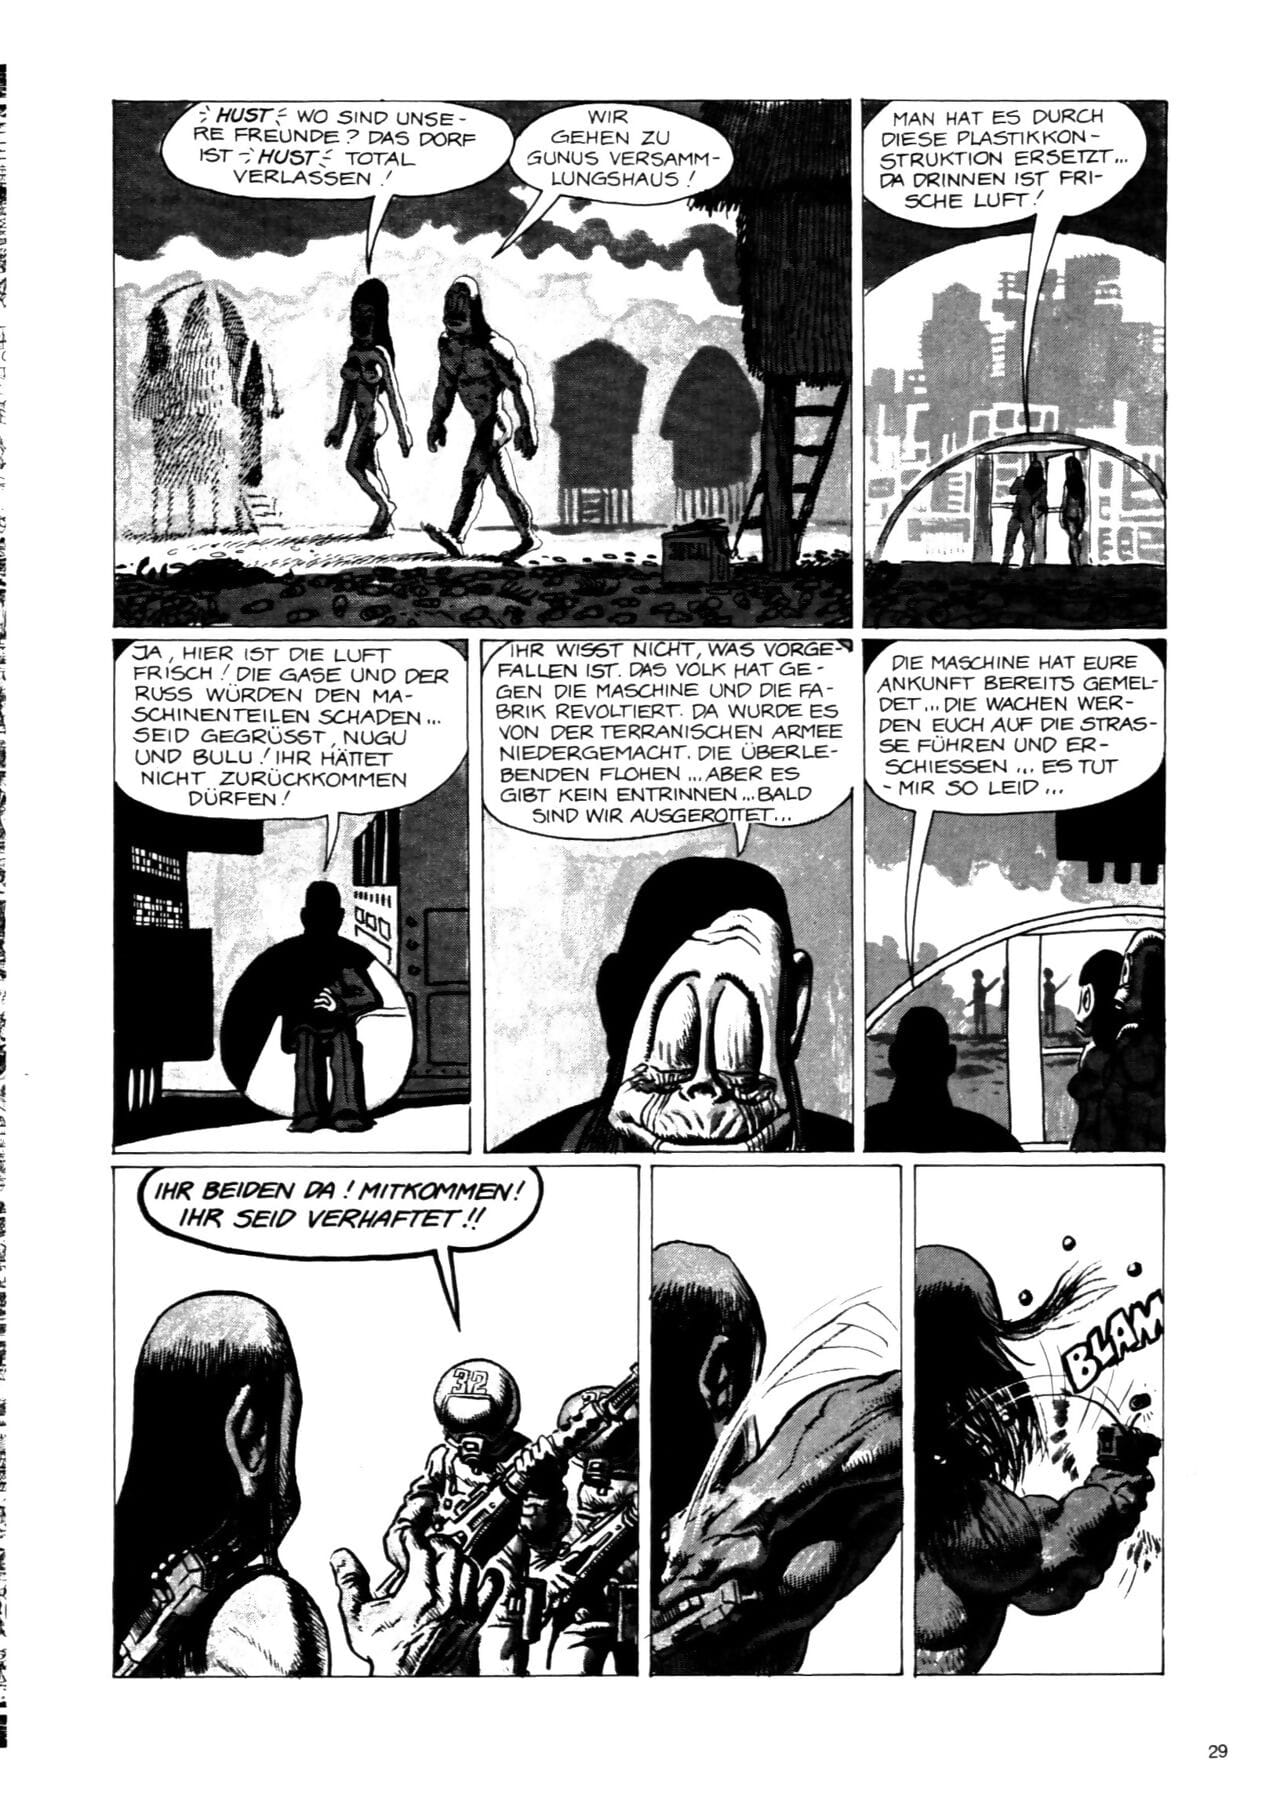 Schwermetall #054 - part 2 page 1